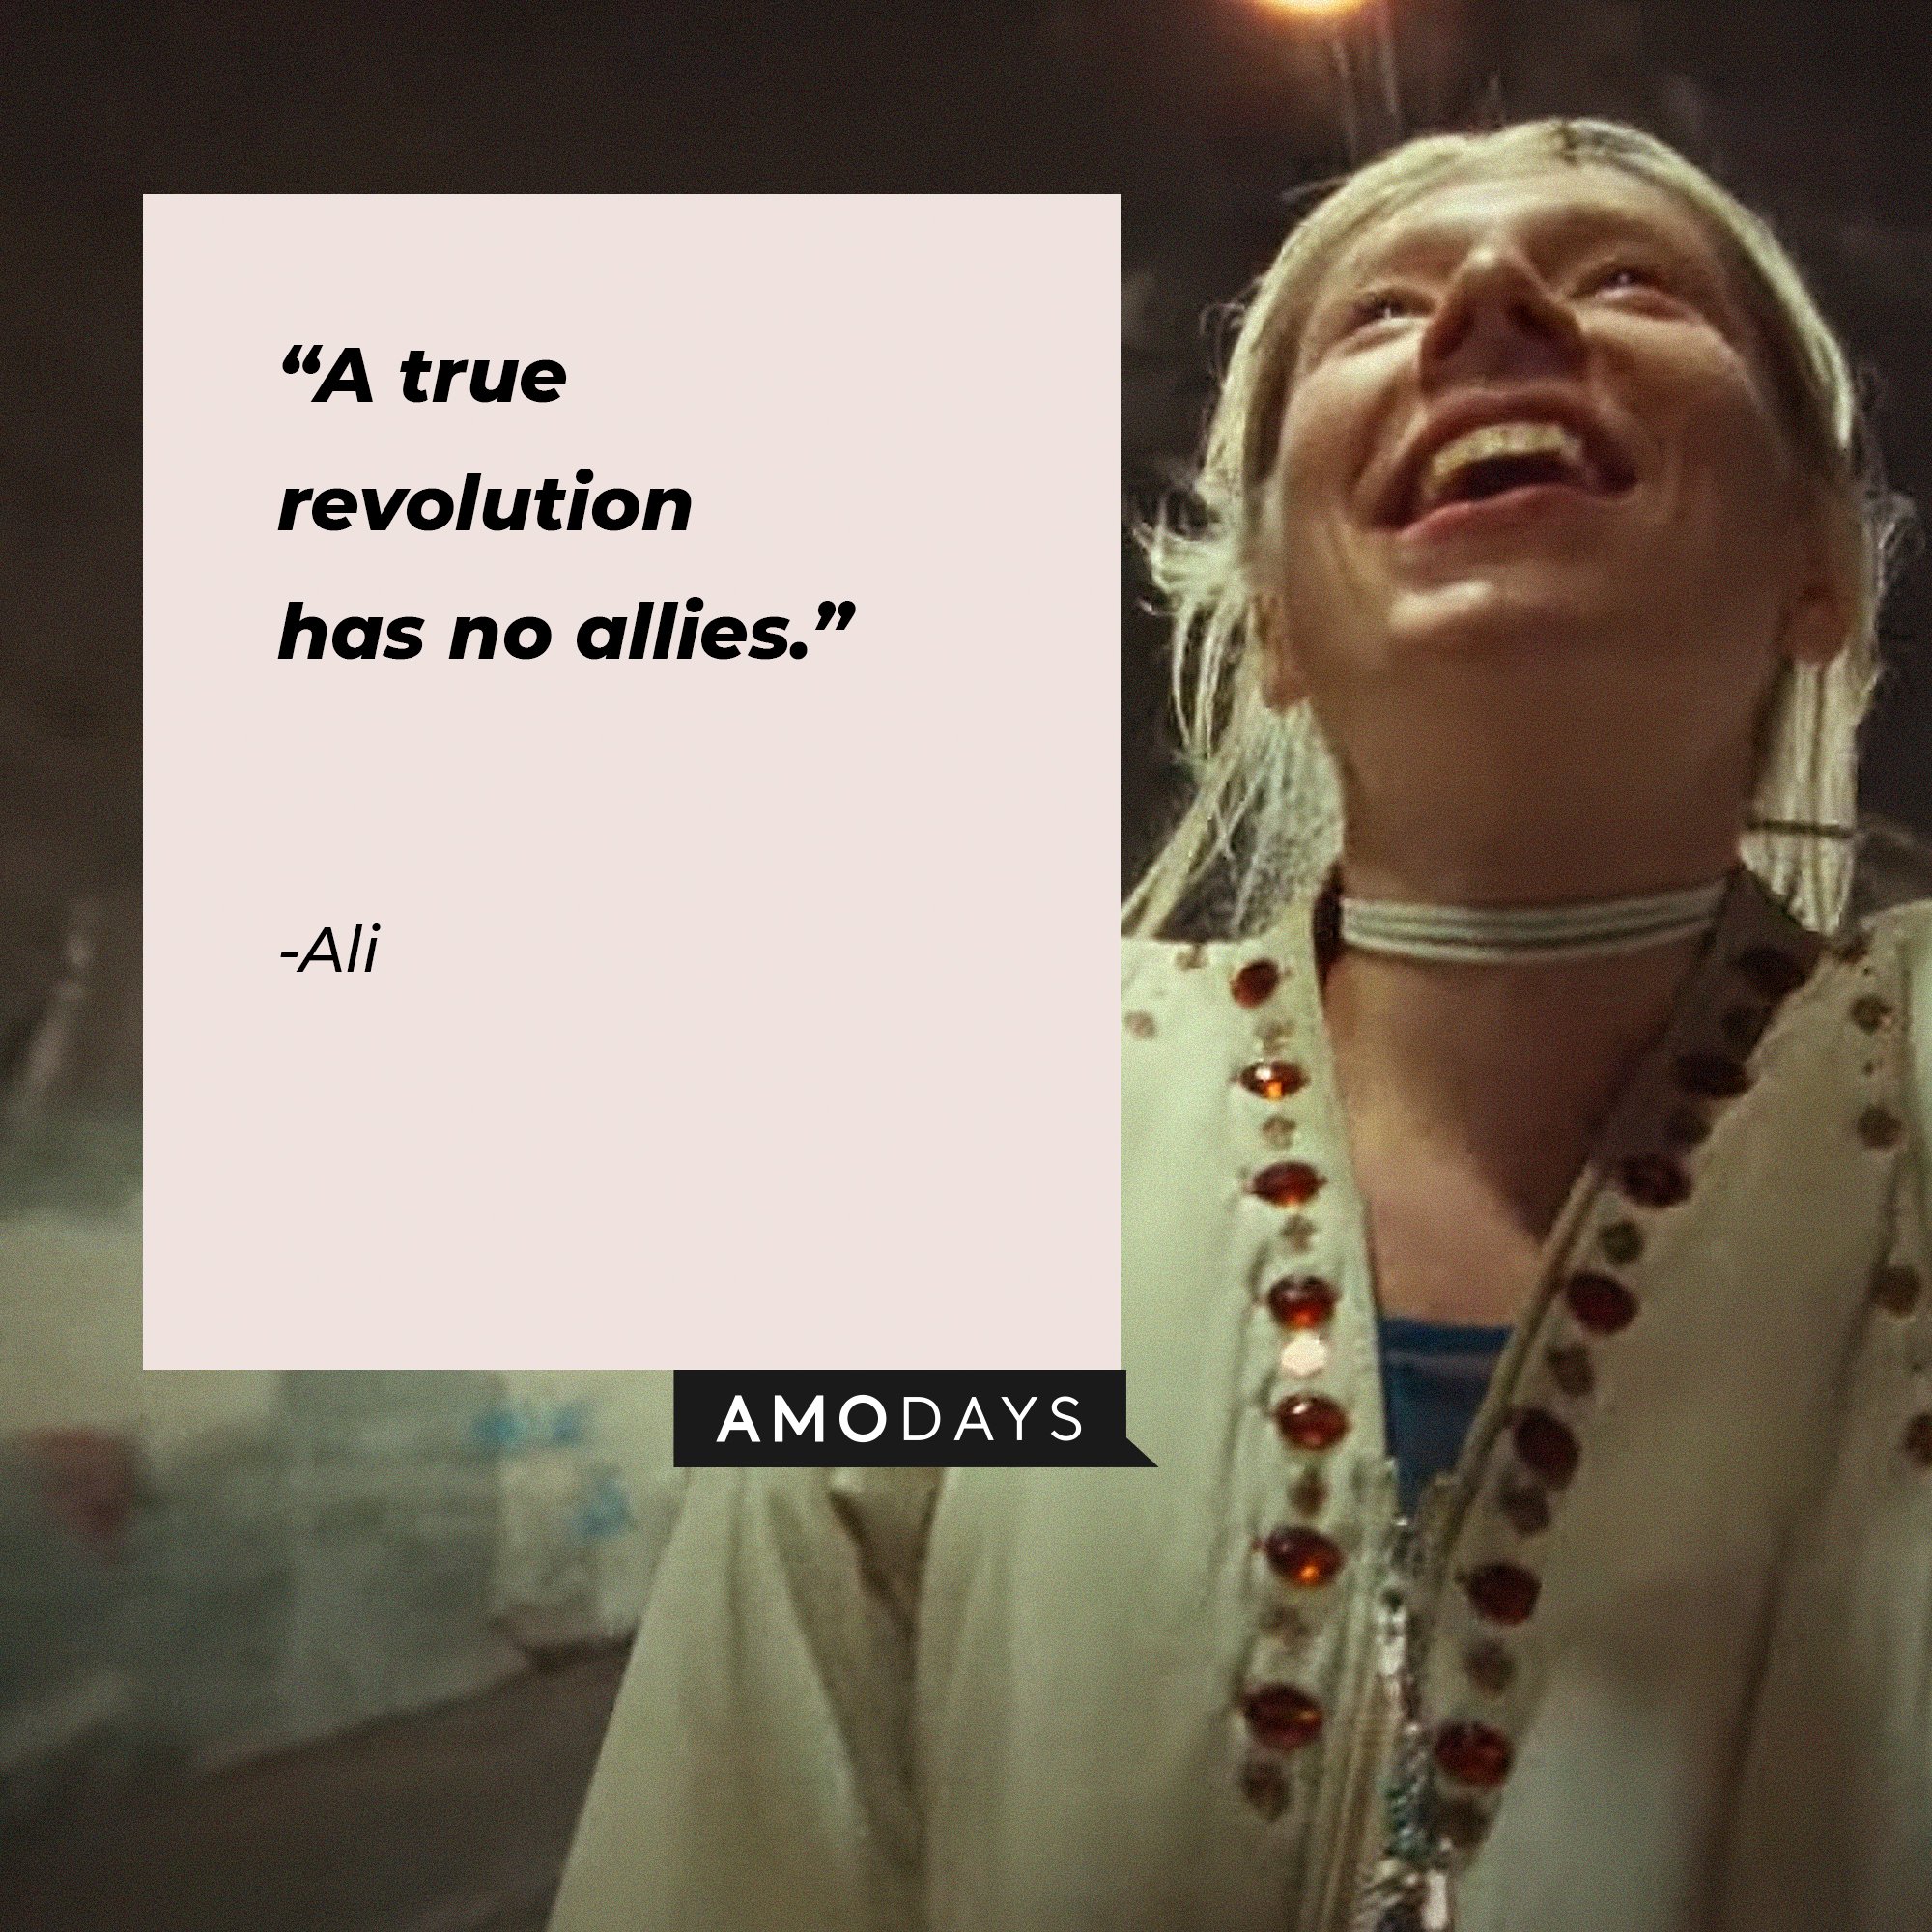 Ali’s quote: “A true revolution has no allies.” | Image: AmoDays